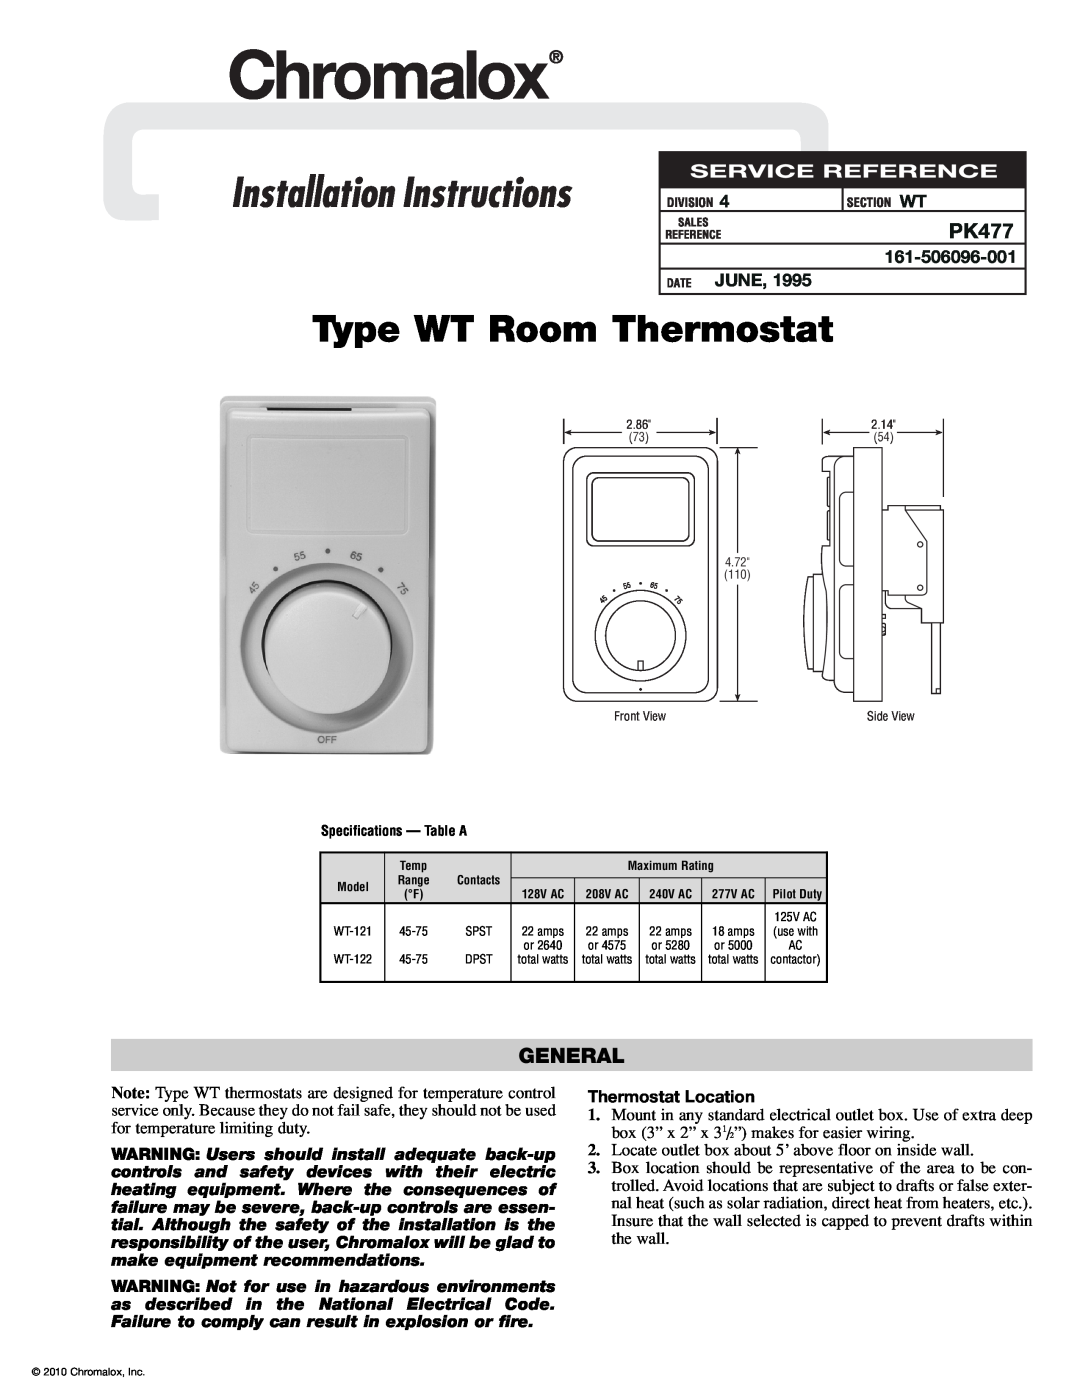 Chromalox PK477 installation instructions General, June, Thermostat Location, Installation Instructions 